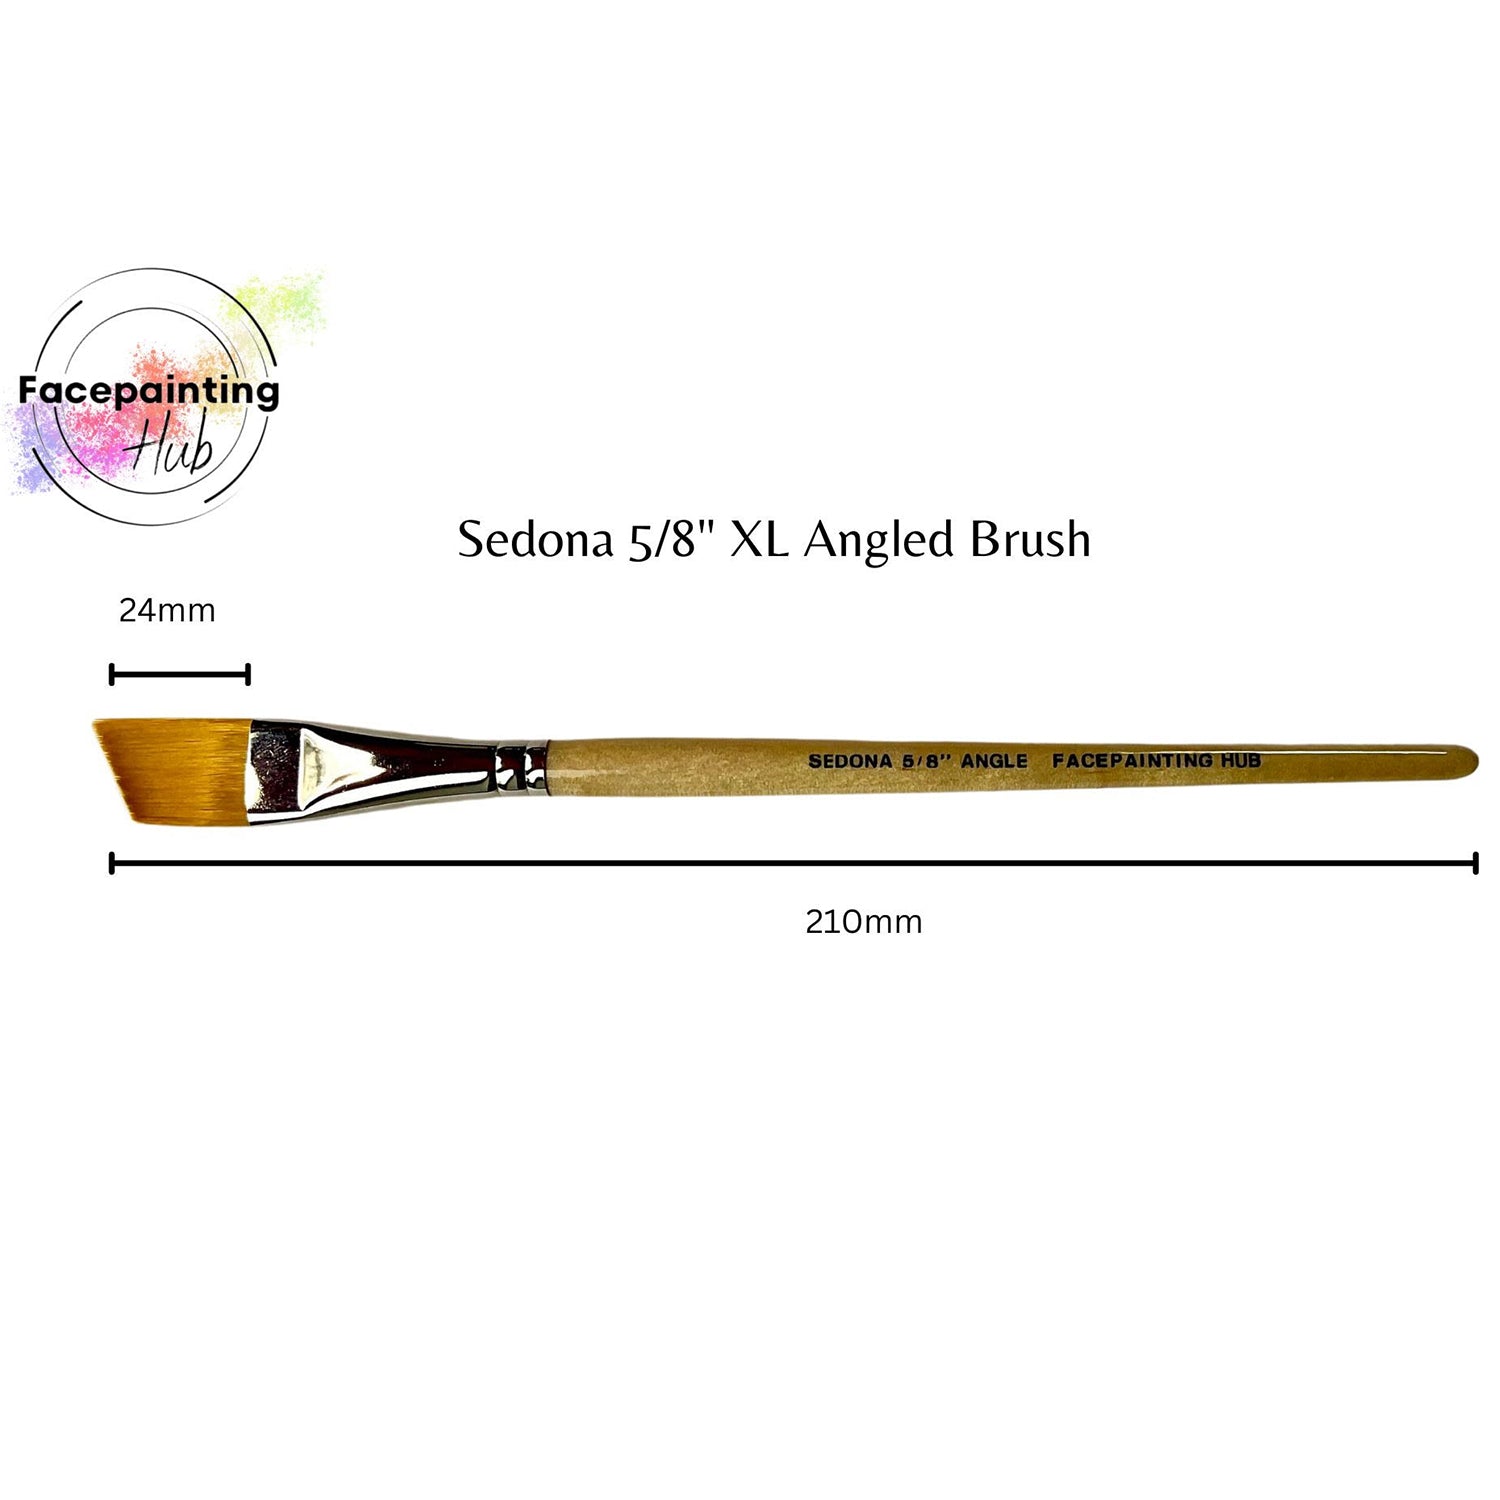 Facepainting Hub Sedona XL (5/8") Angle Brush